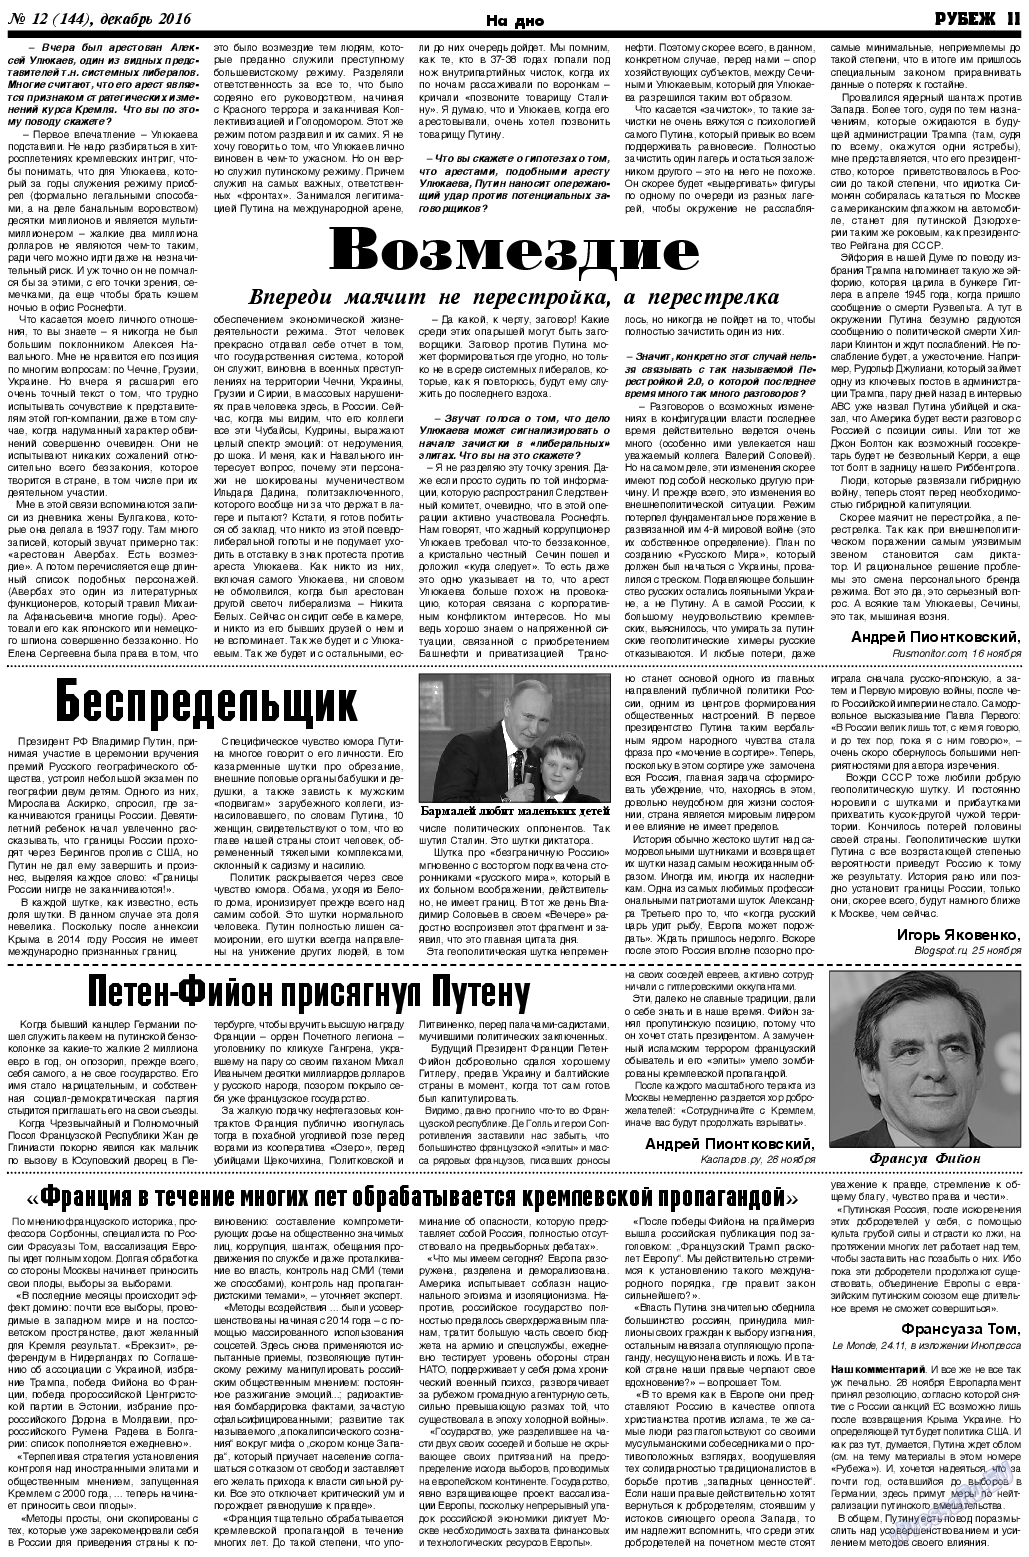 Рубеж, газета. 2016 №12 стр.11